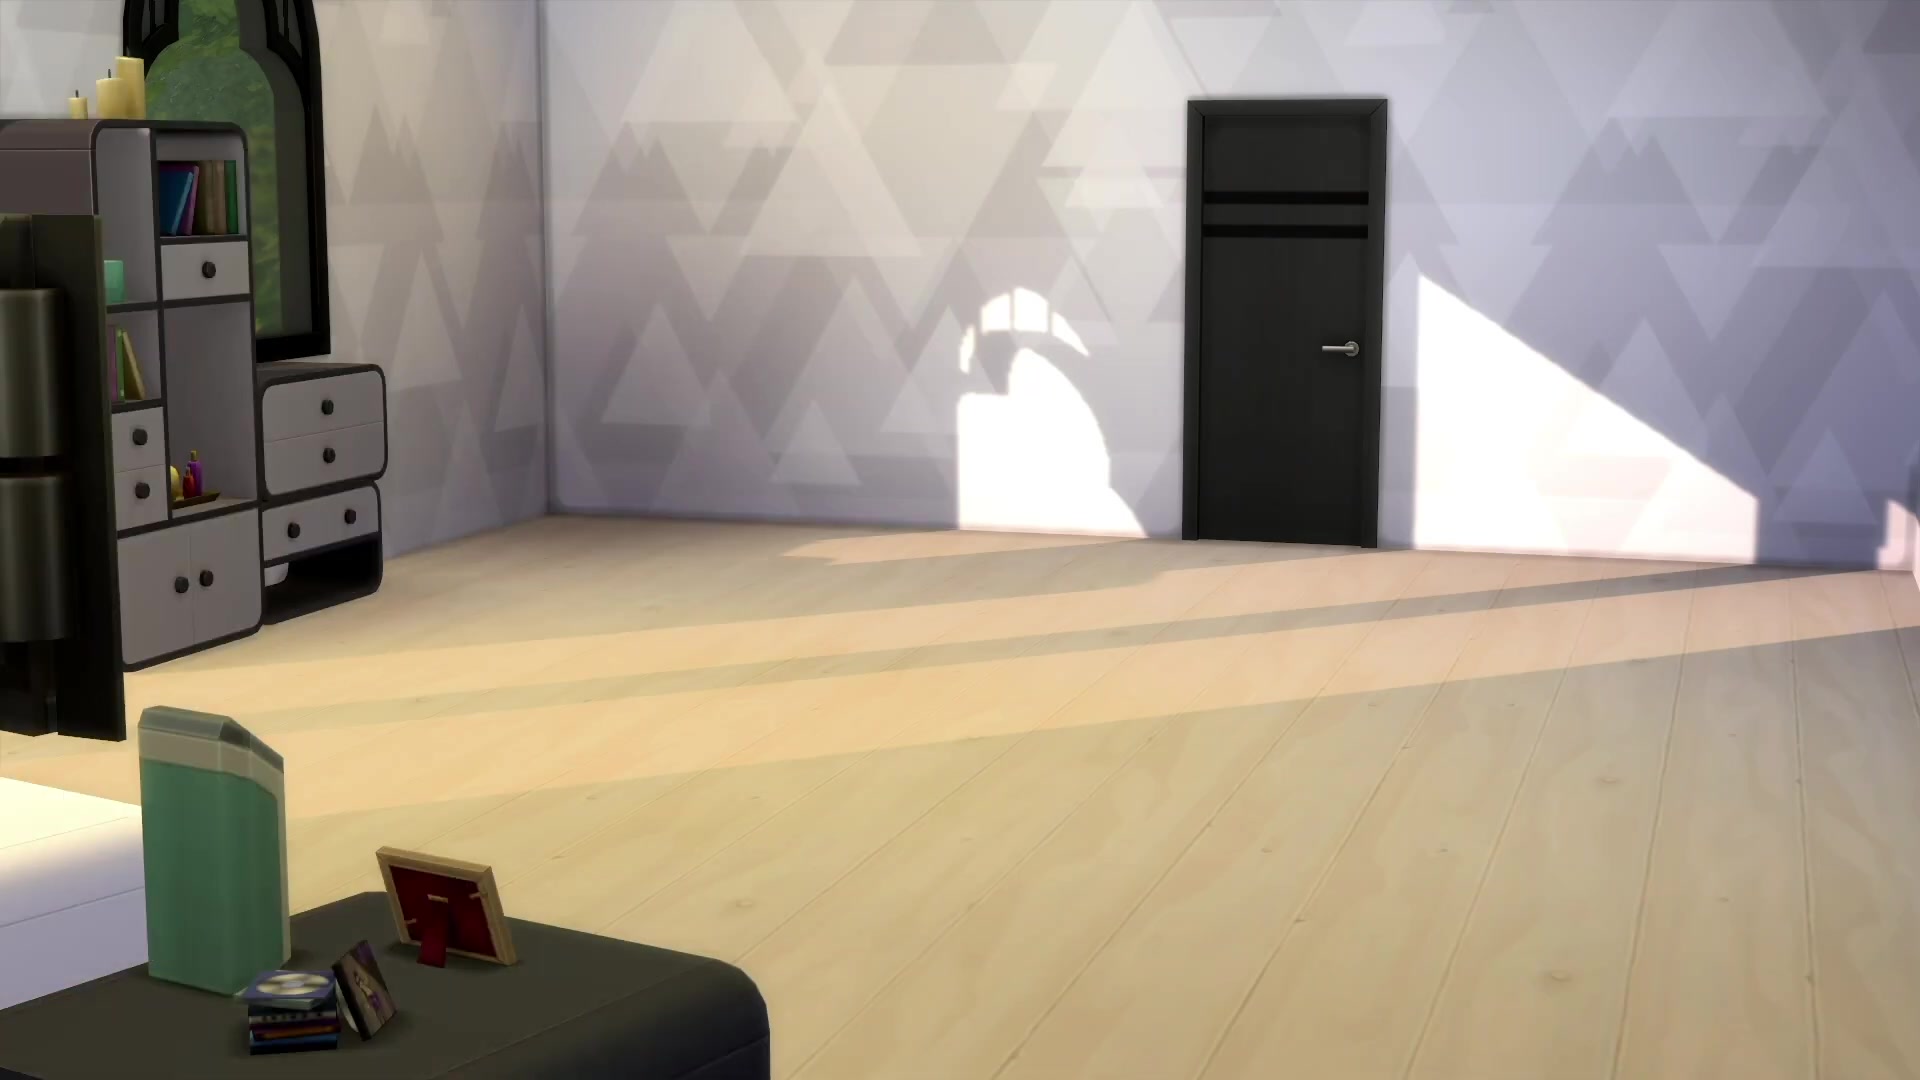 The Sims 4 Dream Home Decorator 150 Gameplay Trailer Screens Simsvip